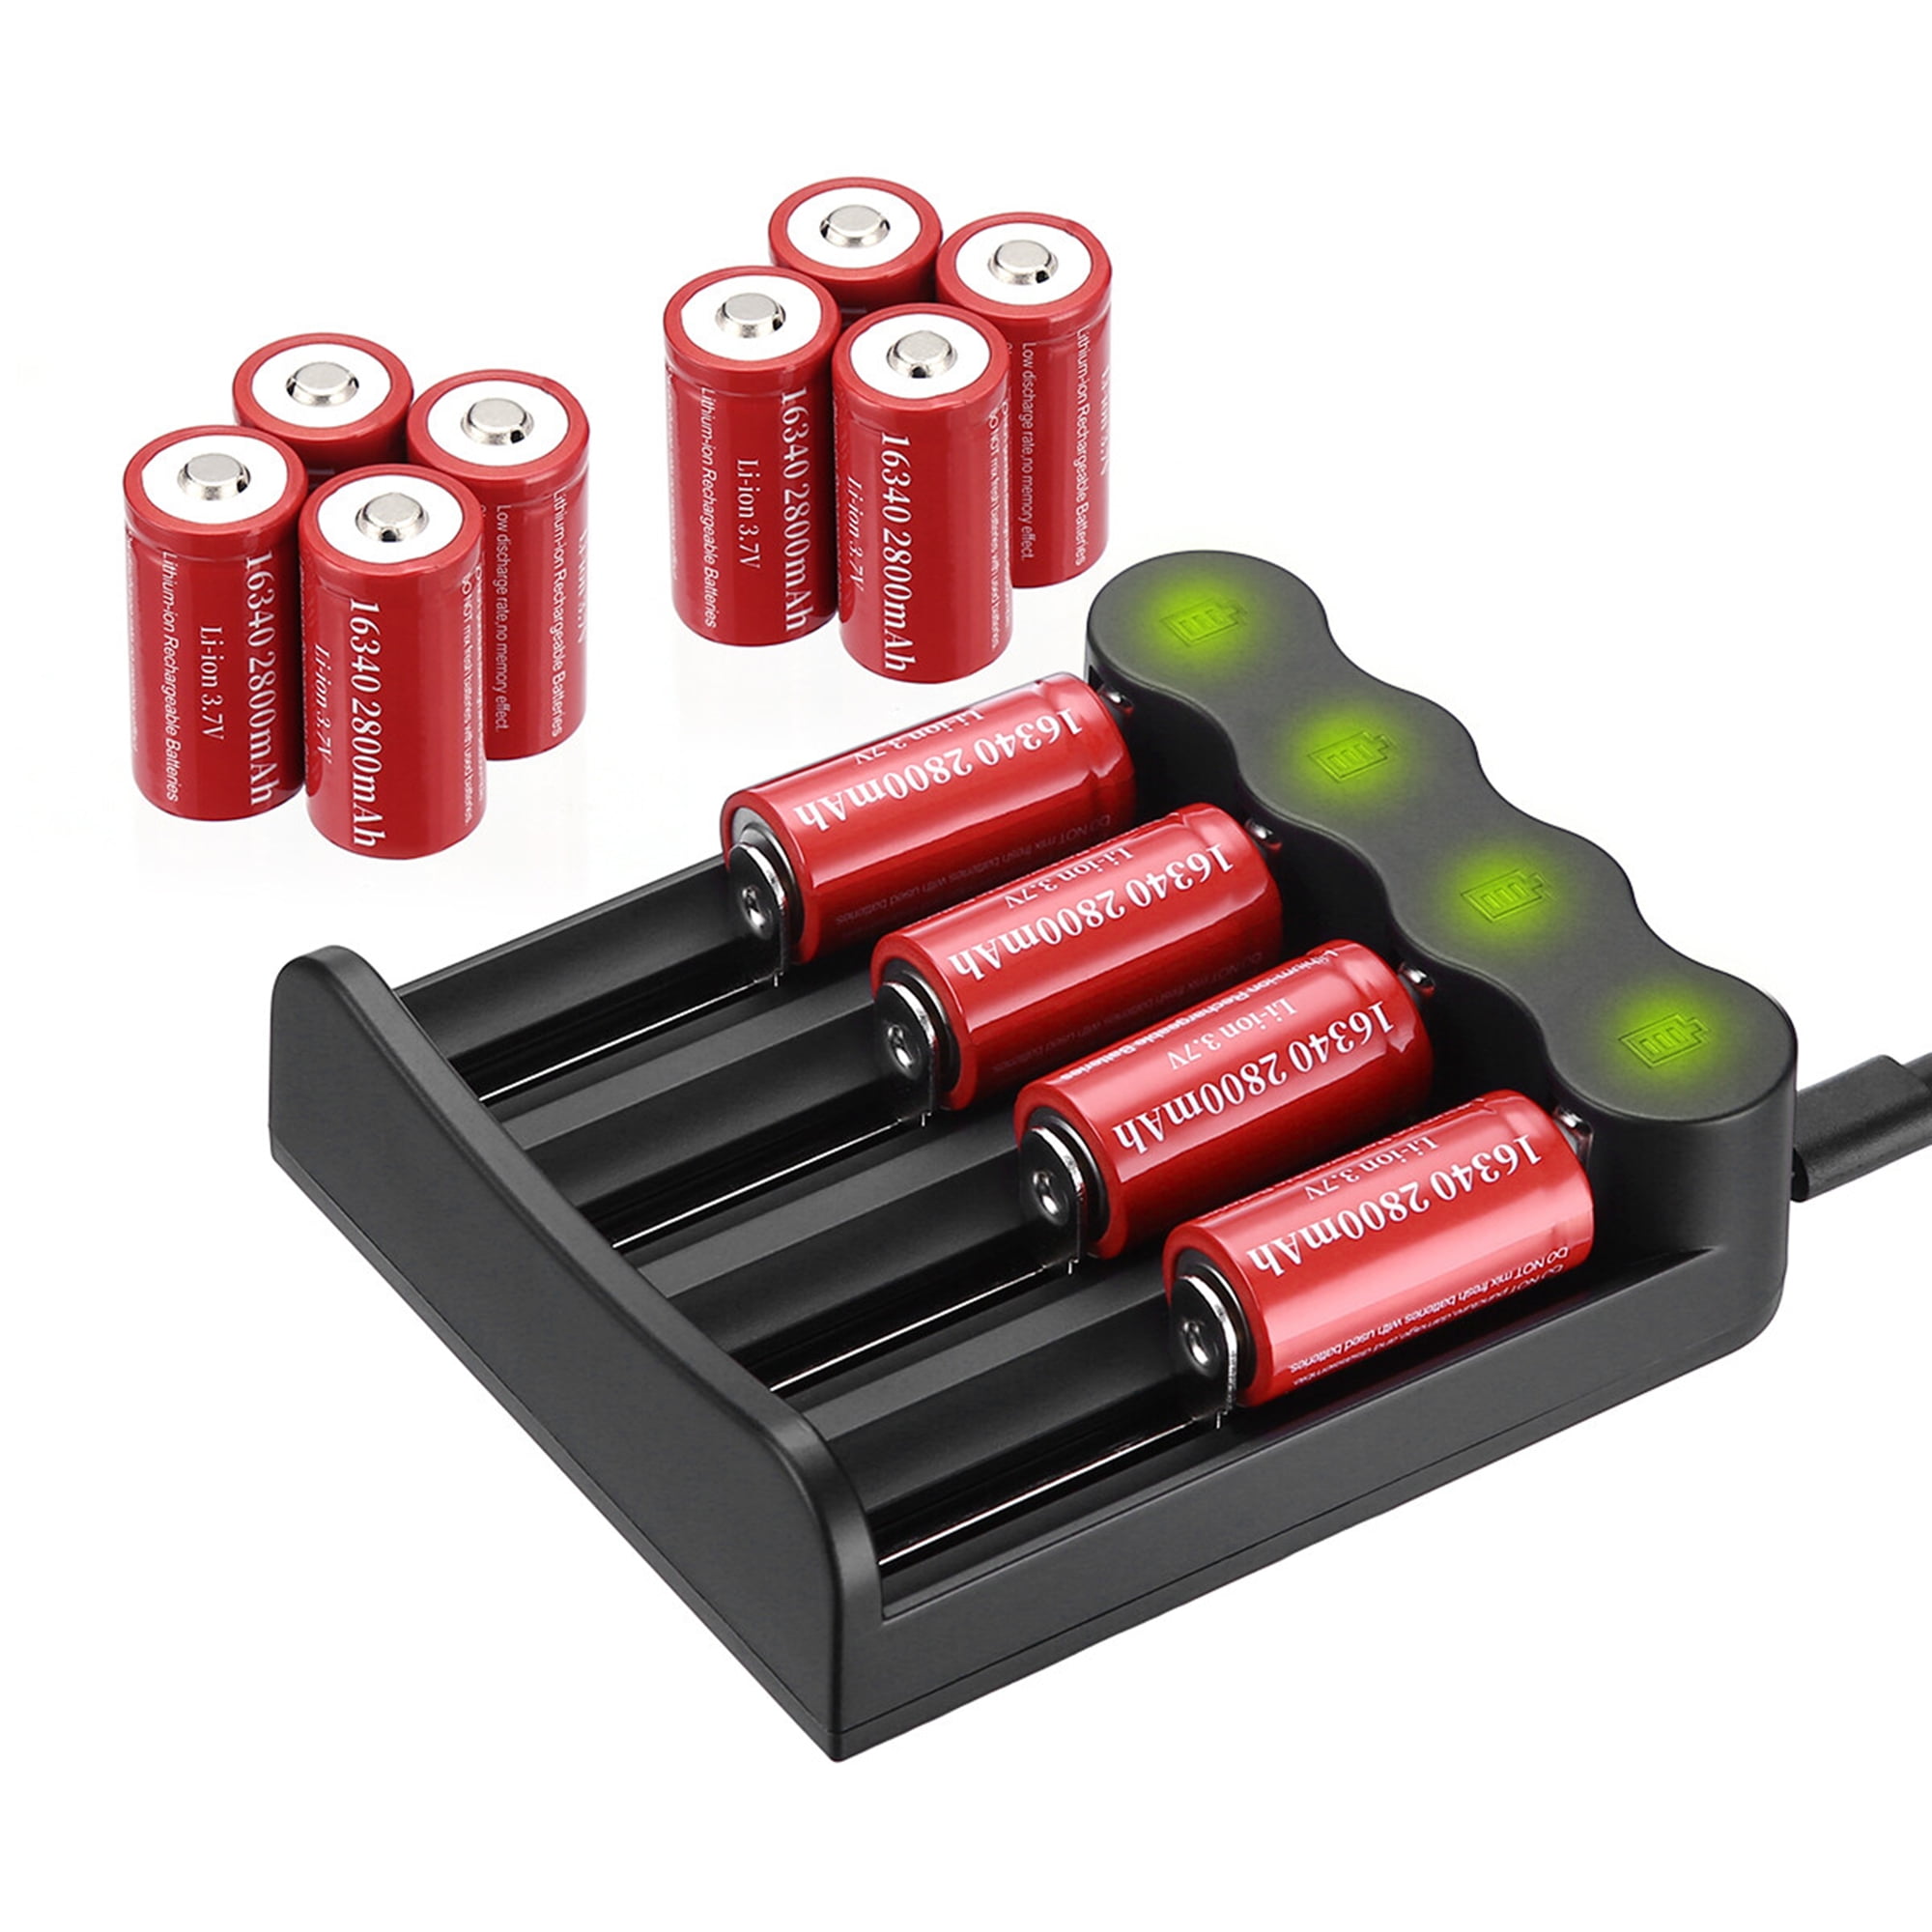 Baffle Ik heb een contract gemaakt Luipaard EBL 3.7V 16340 CR123A Rechargeable Batteries (12 Pack) + 4 Slot LED Battery  Charger for 16650 20700 26650 Li-Ion Batteries - Walmart.com